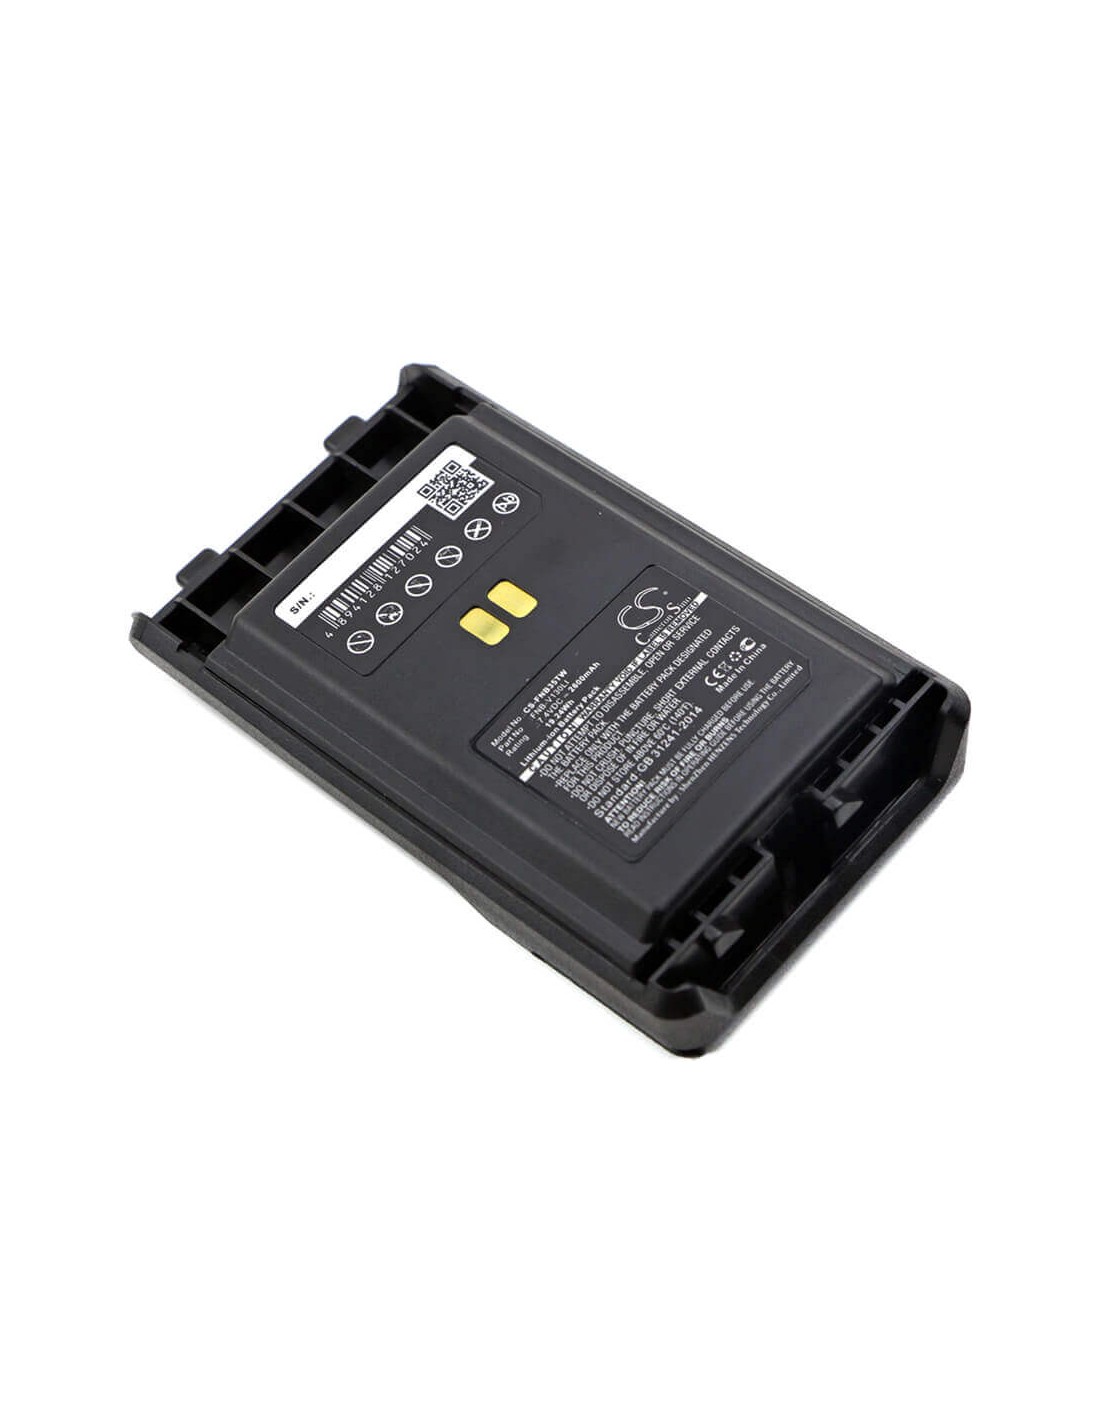 Battery for Vertex Vx-351, Vx-354, Vx-359 7.4V, 2600mAh - 19.24Wh